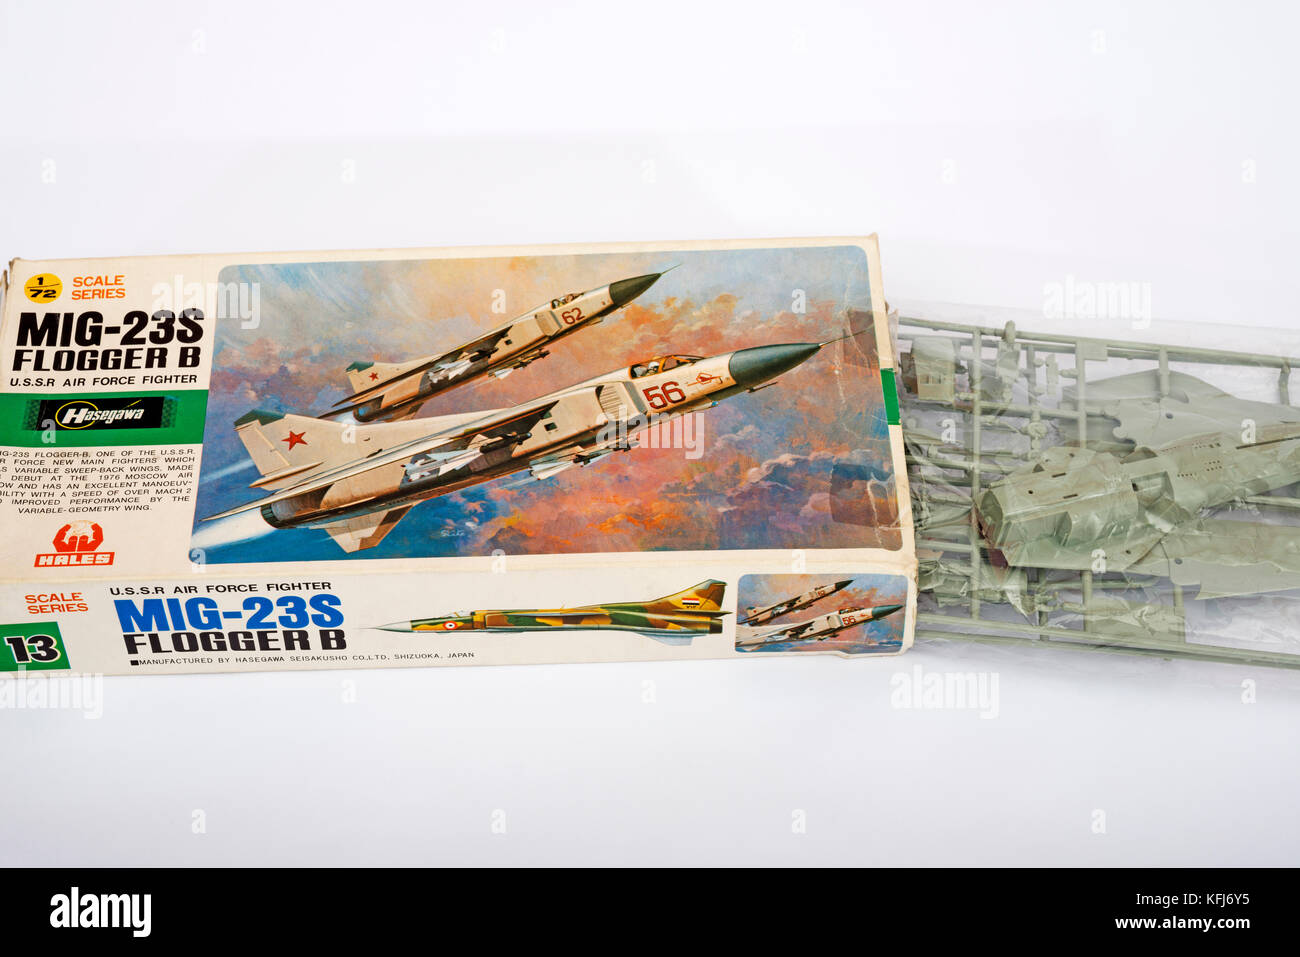 Mig-23 fighter jet model kit Stock Photo